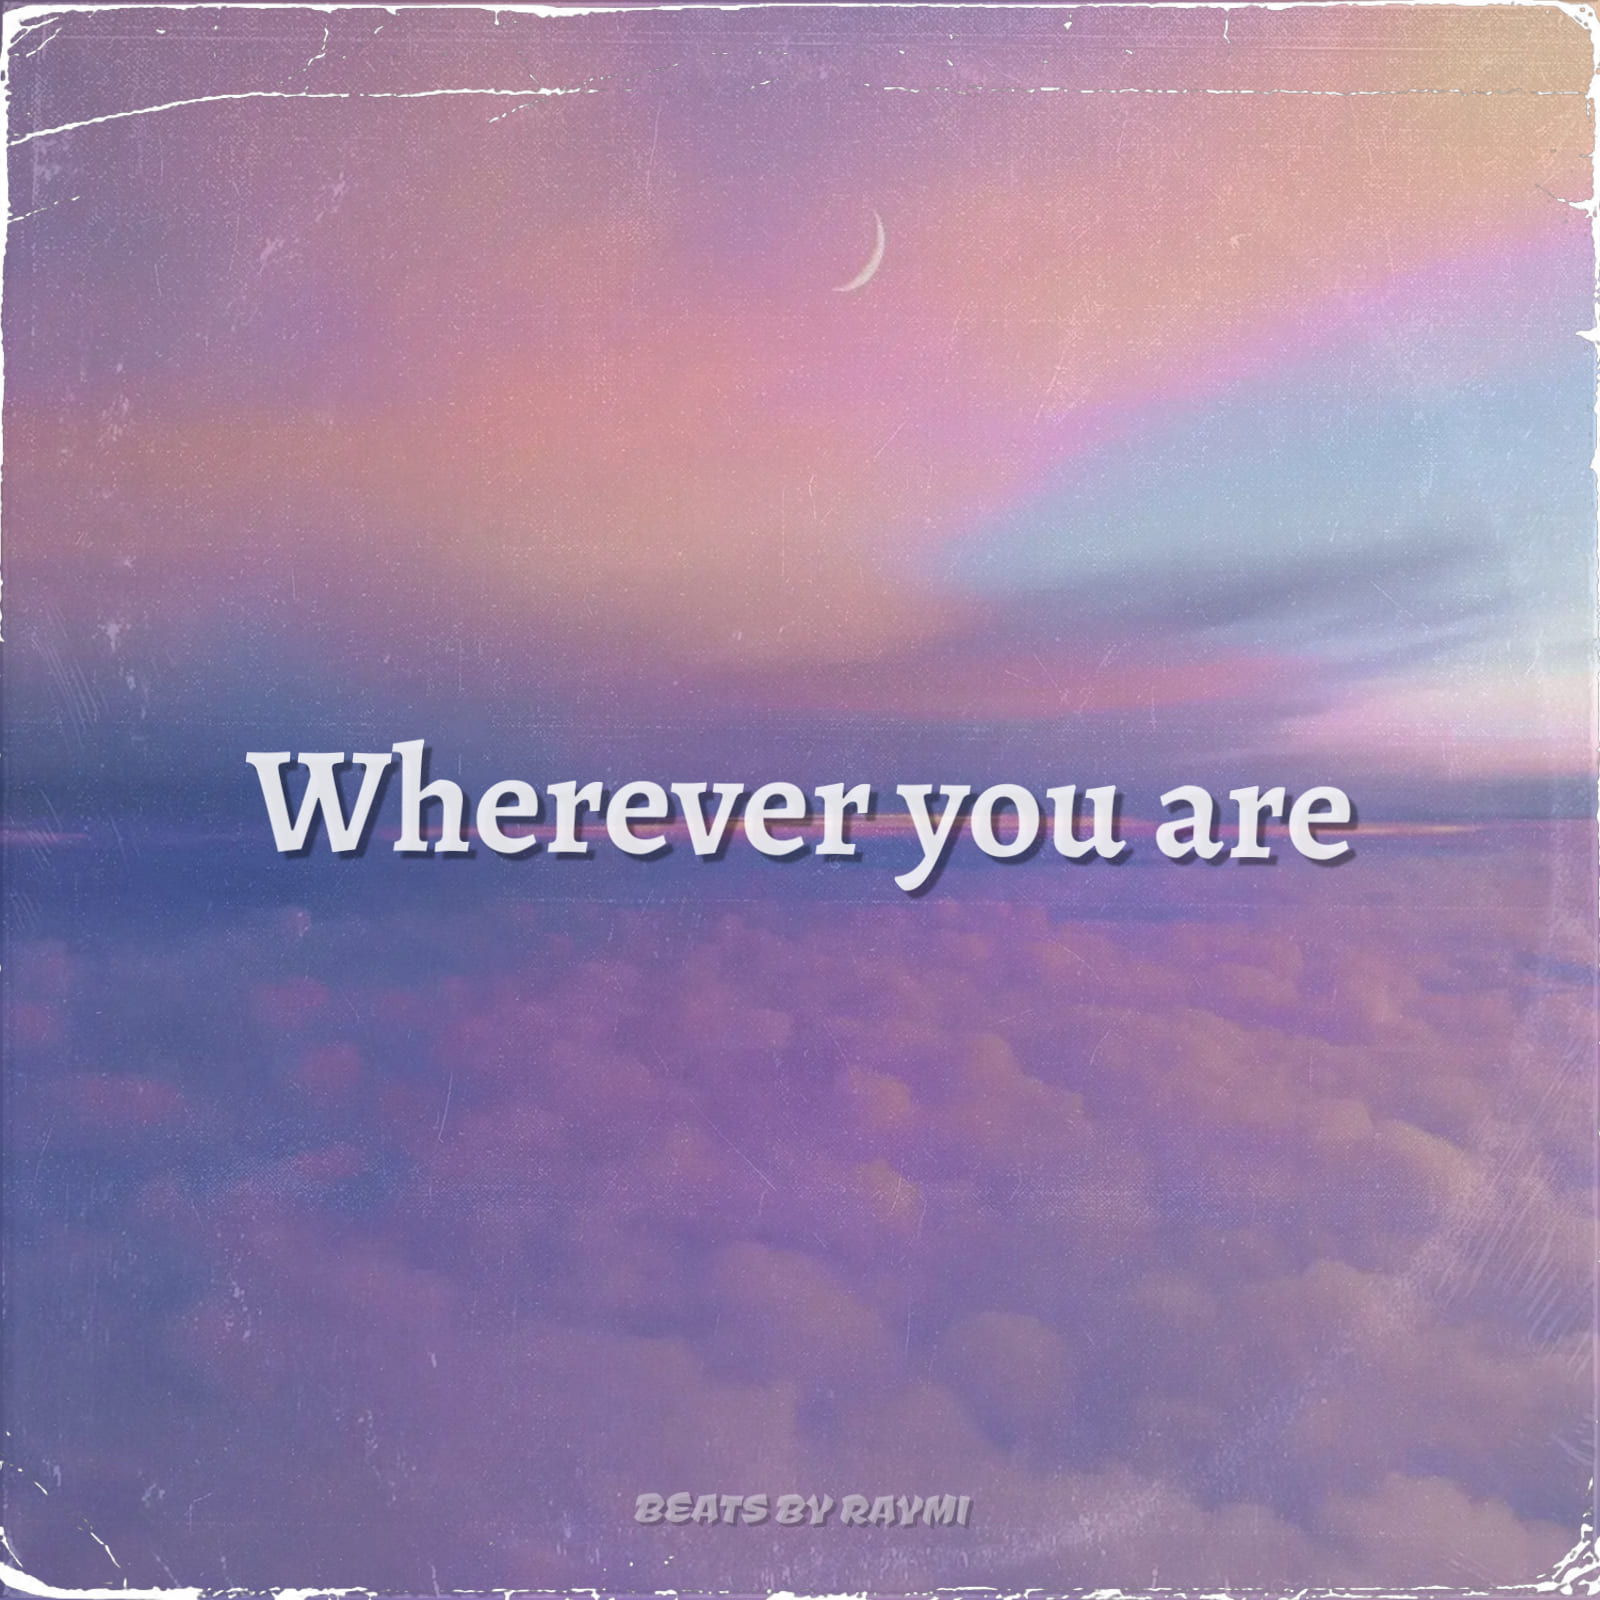 обложка бита, Raymi, музыка, cover, Wherever you are (красивый, мечтательный бит)